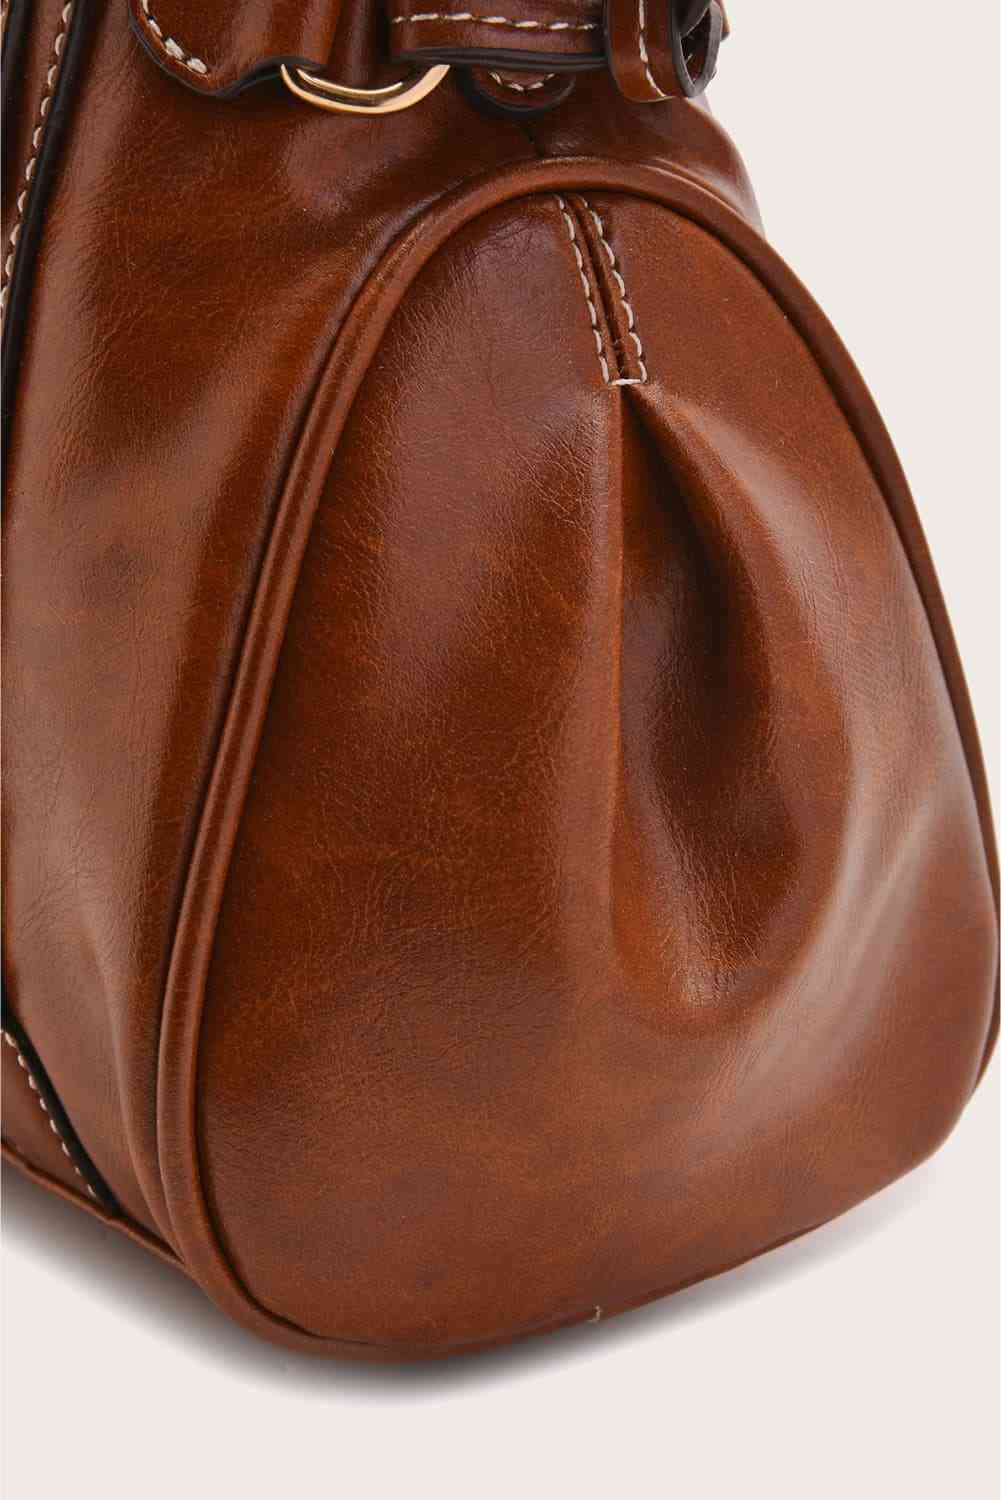 My Favorite Vegan Leather Handbag